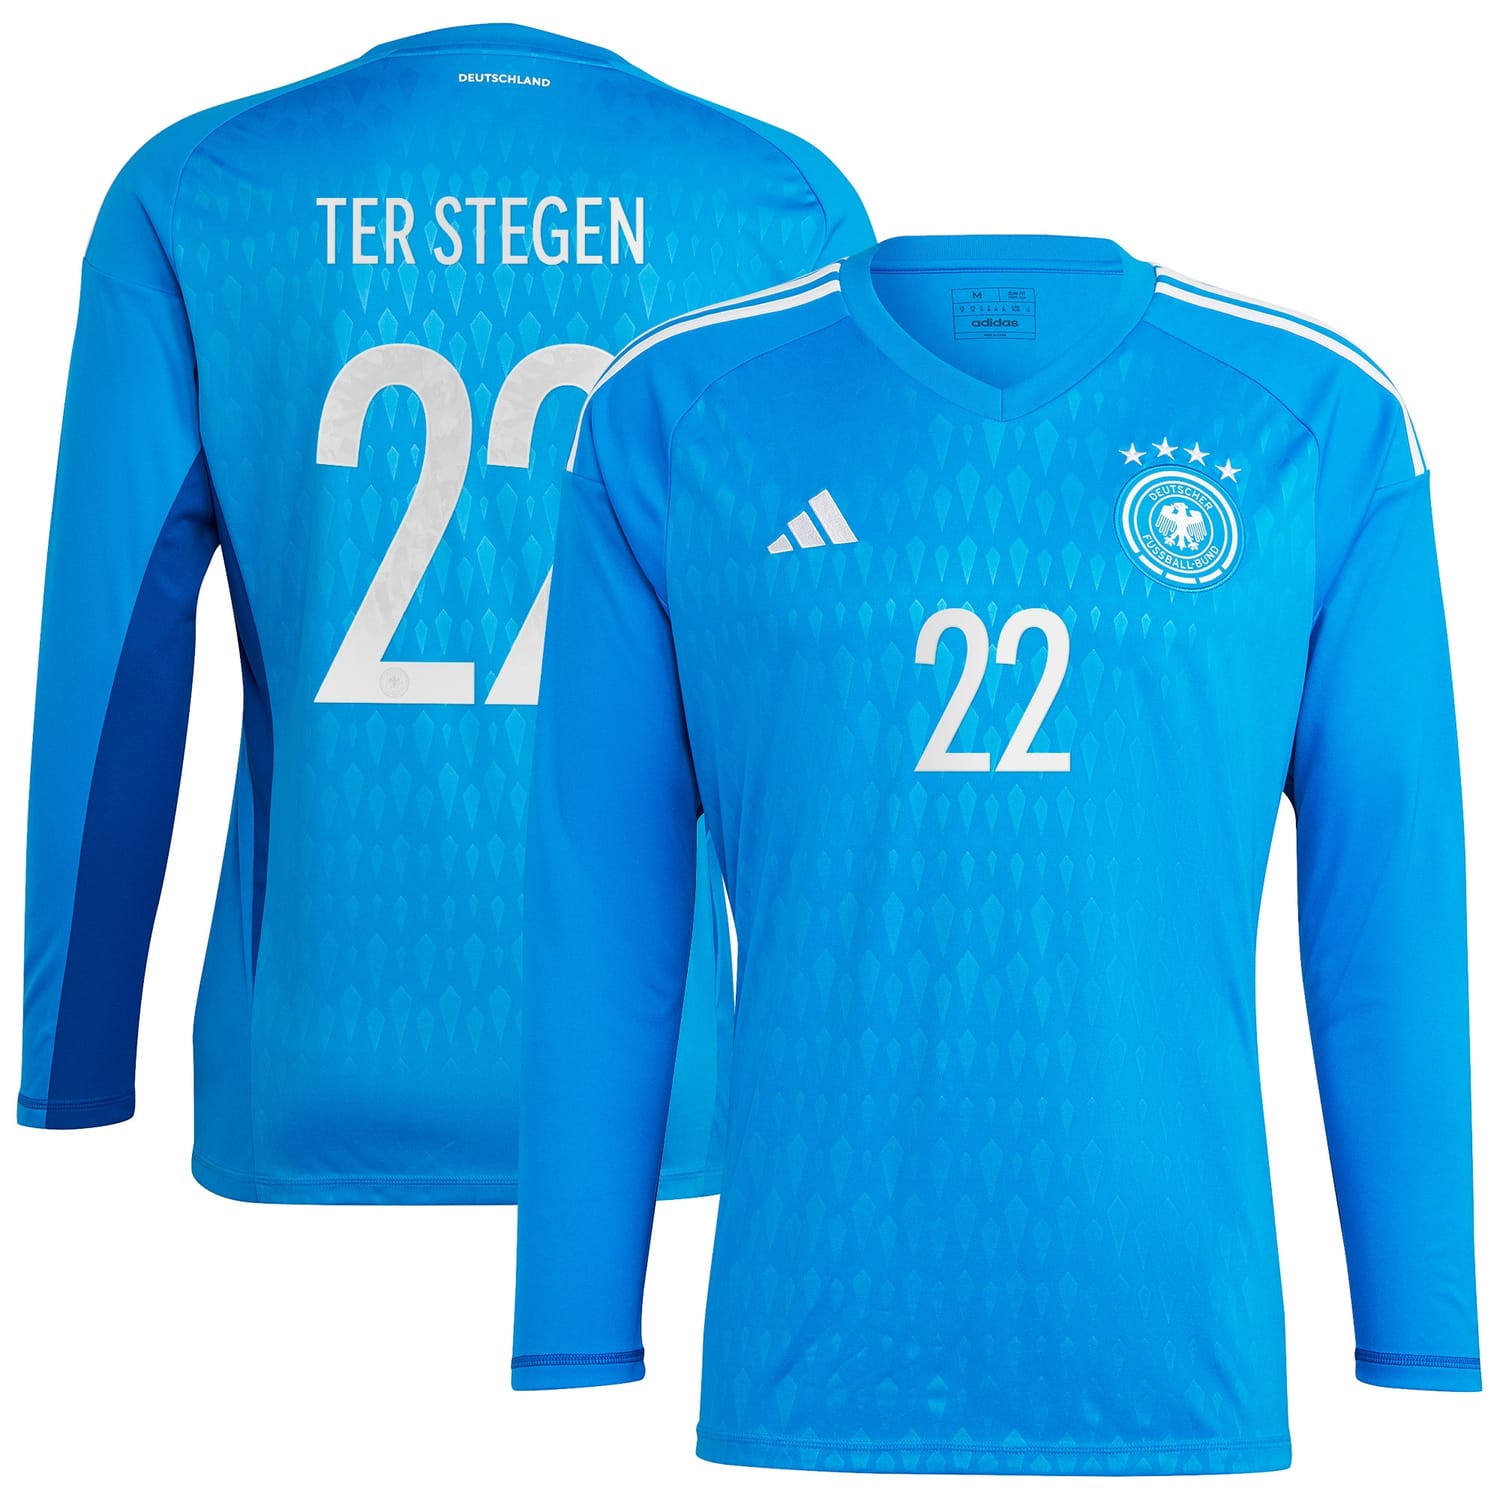 Germany National Team Goalkeeper Jersey Shirt Long Sleeve player Marc-André ter Stegen 22 printing for Men